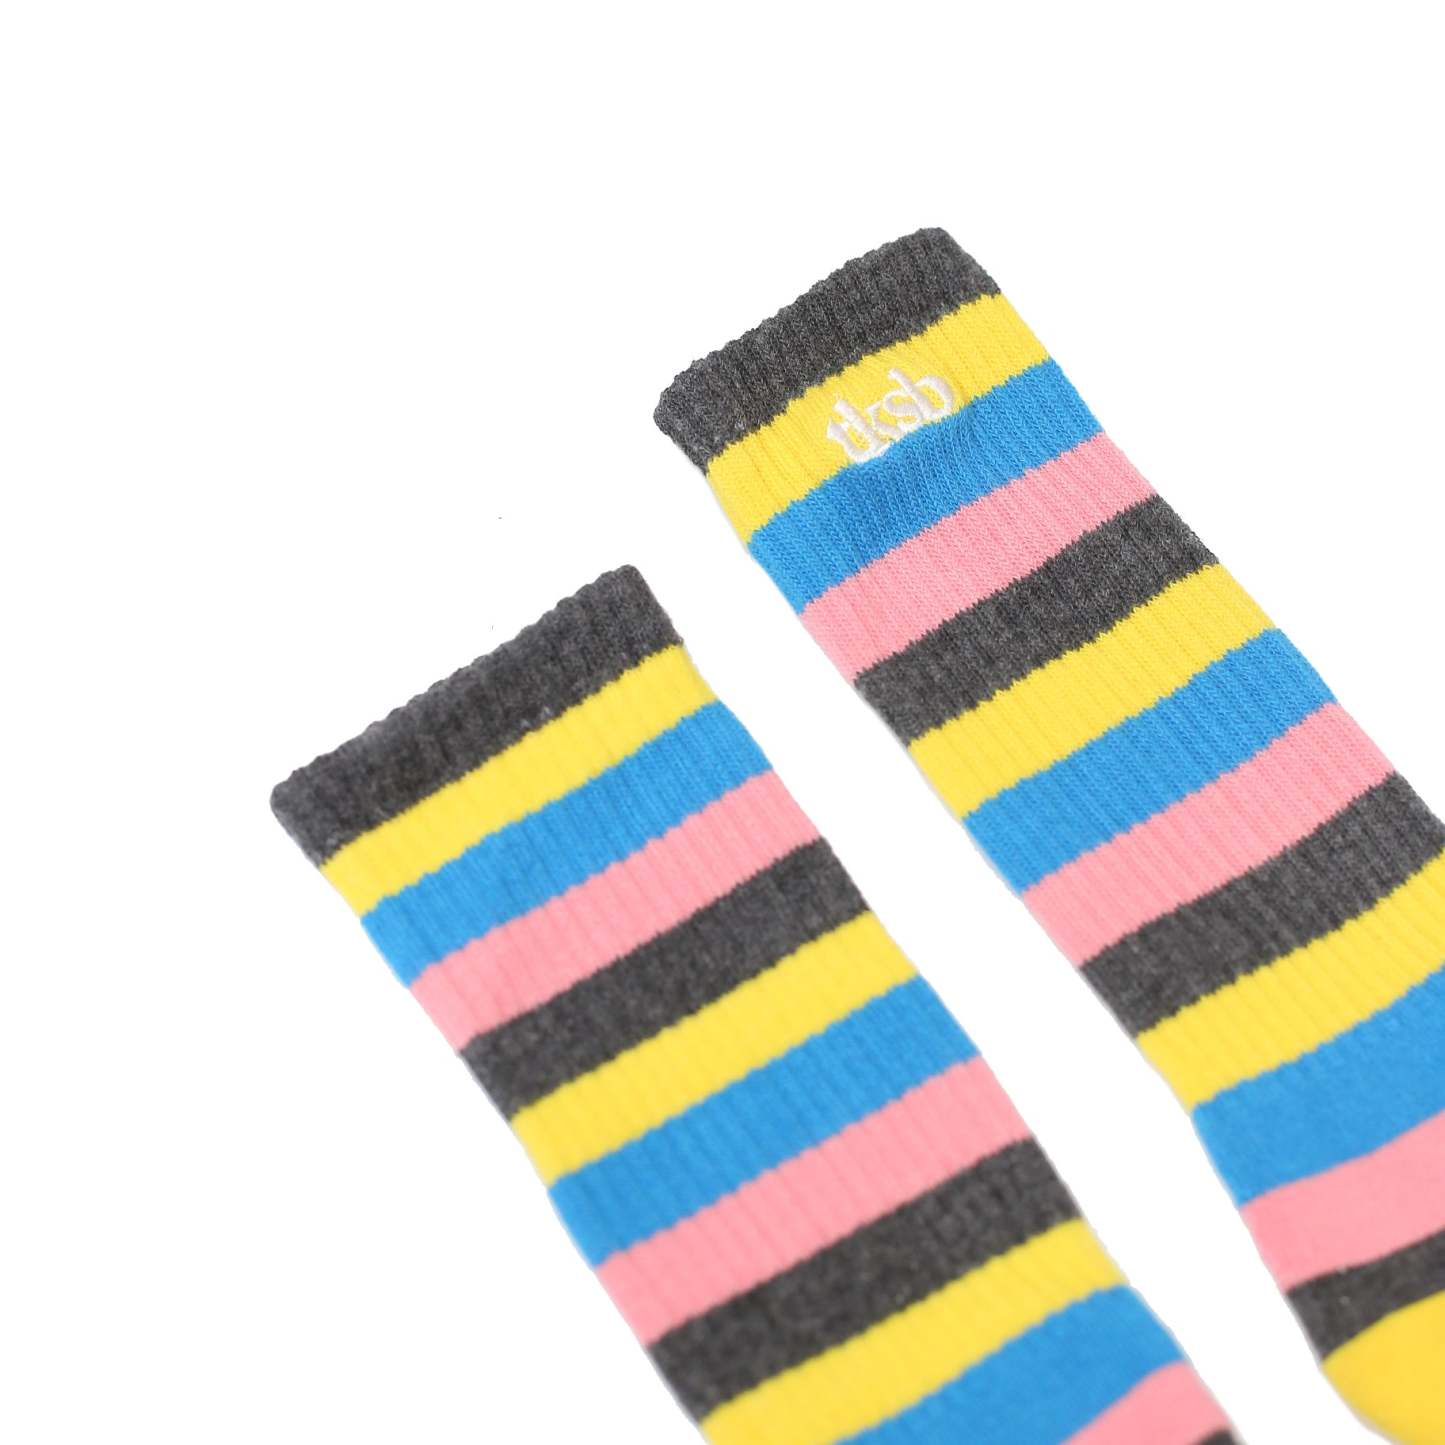 TKSB - AM Morning Pink Stripe Socks